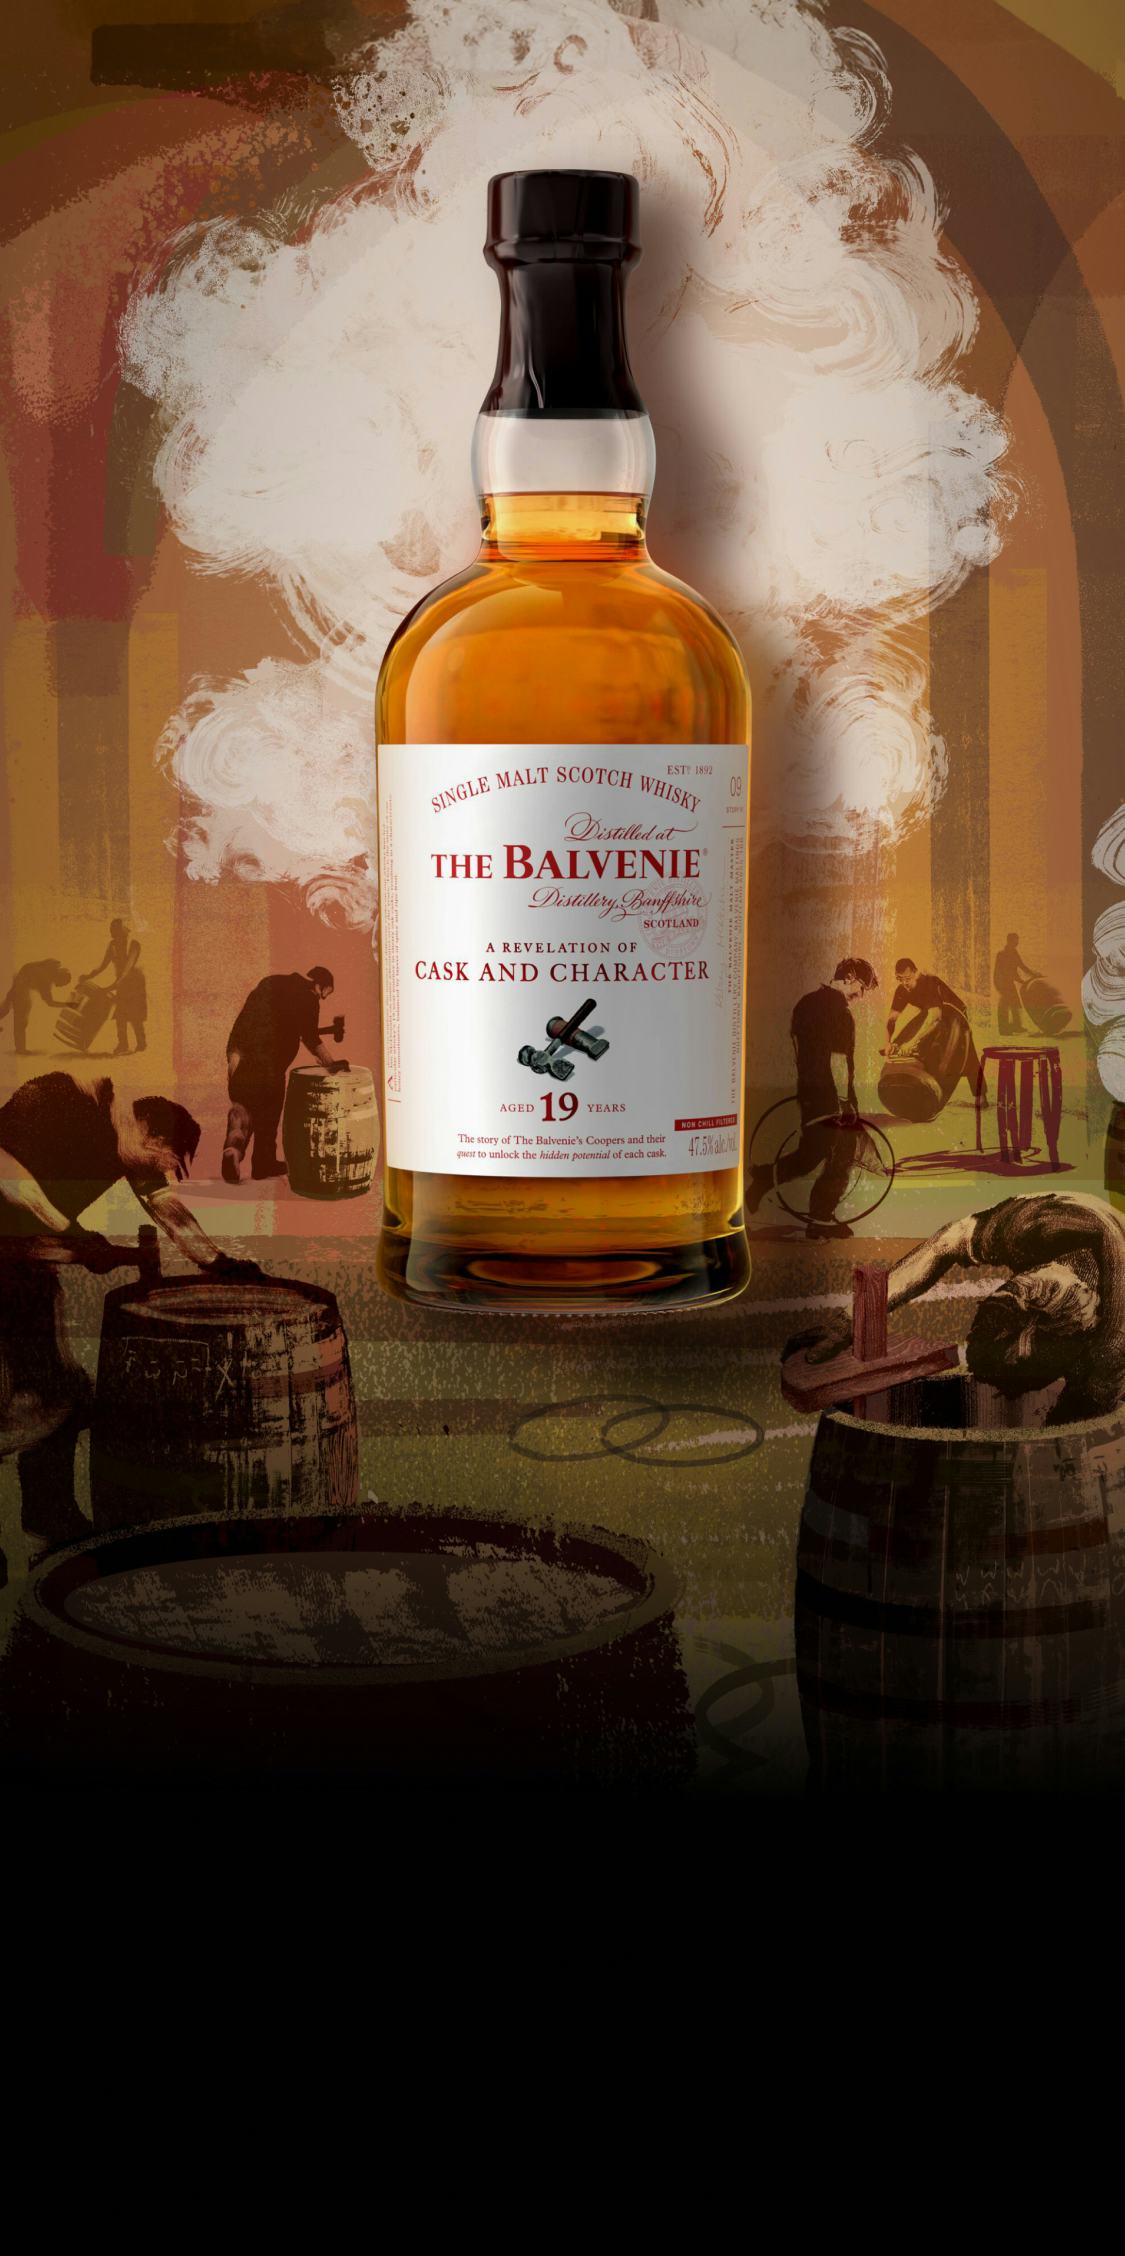 The Balvenie - Crafted Whisky Malt Single Scotch in Speyside